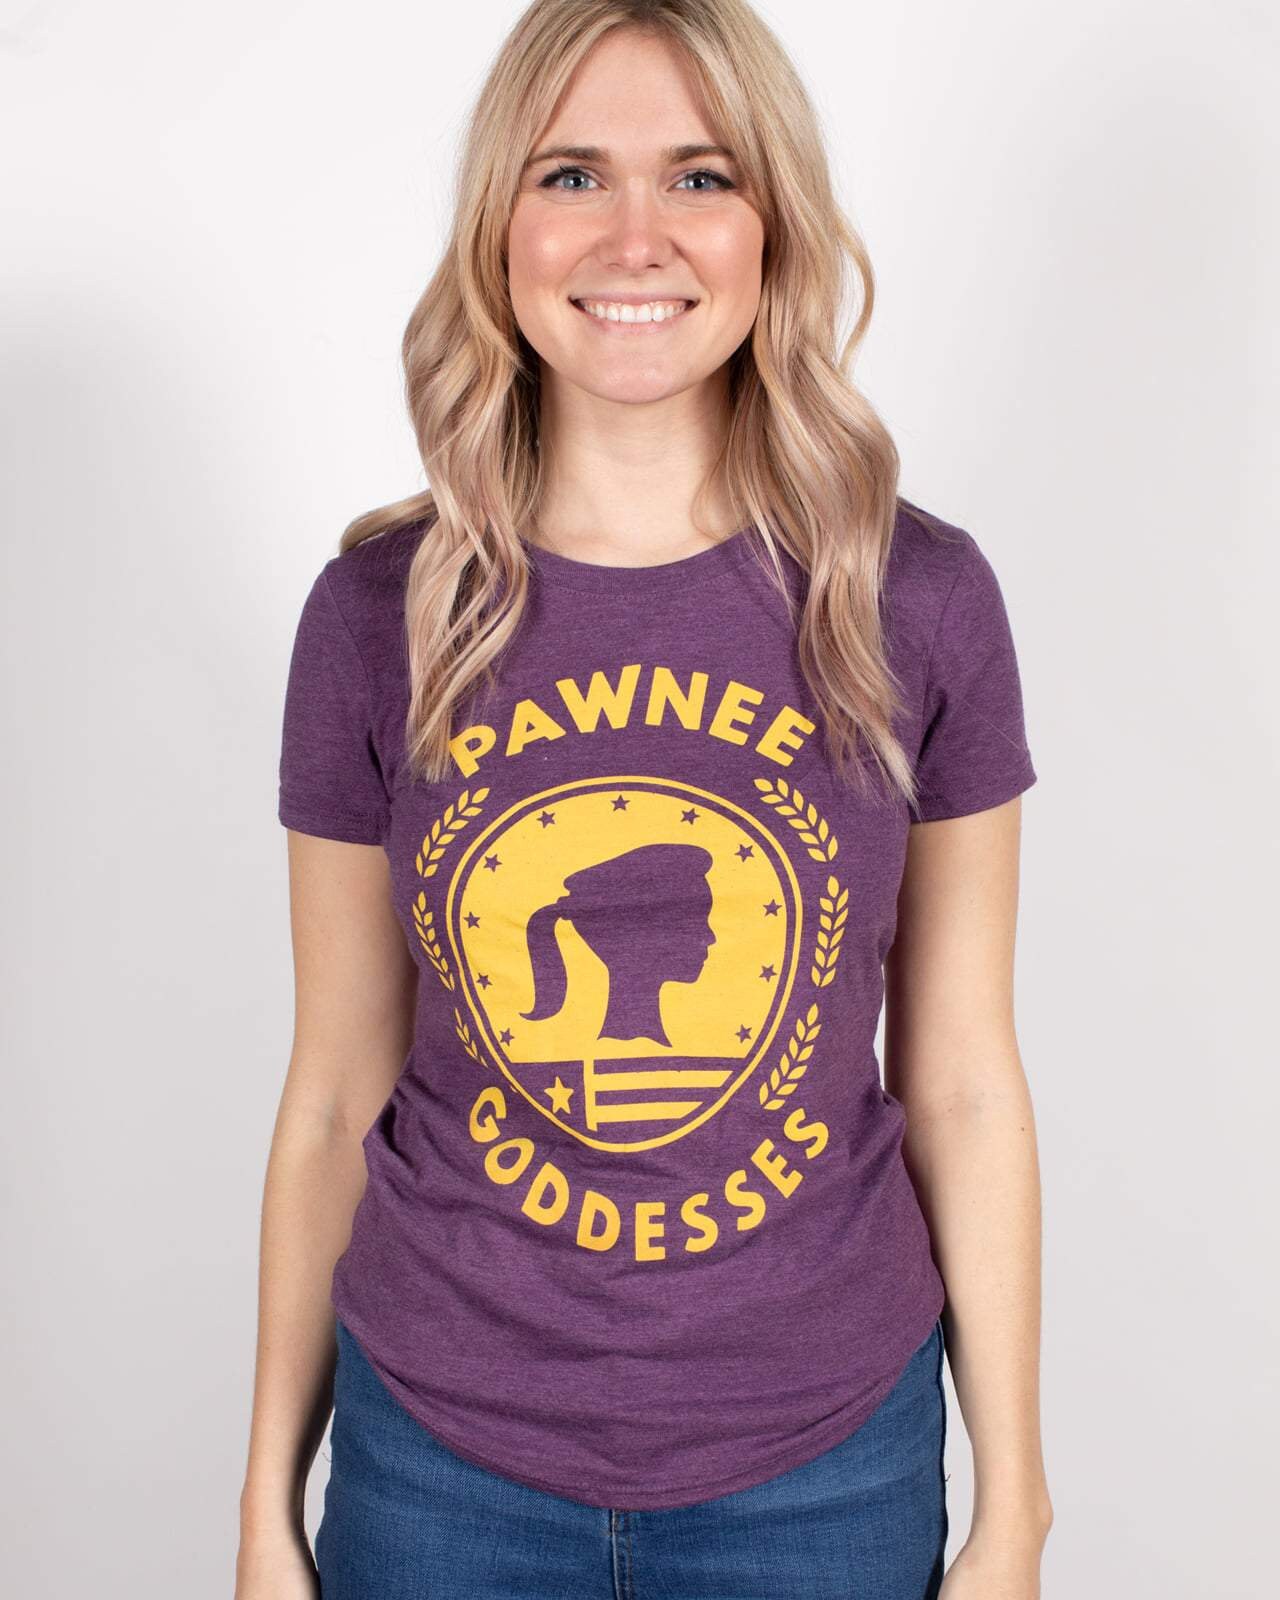 Pawnee Goddesses WOMENS Tee | Etsy